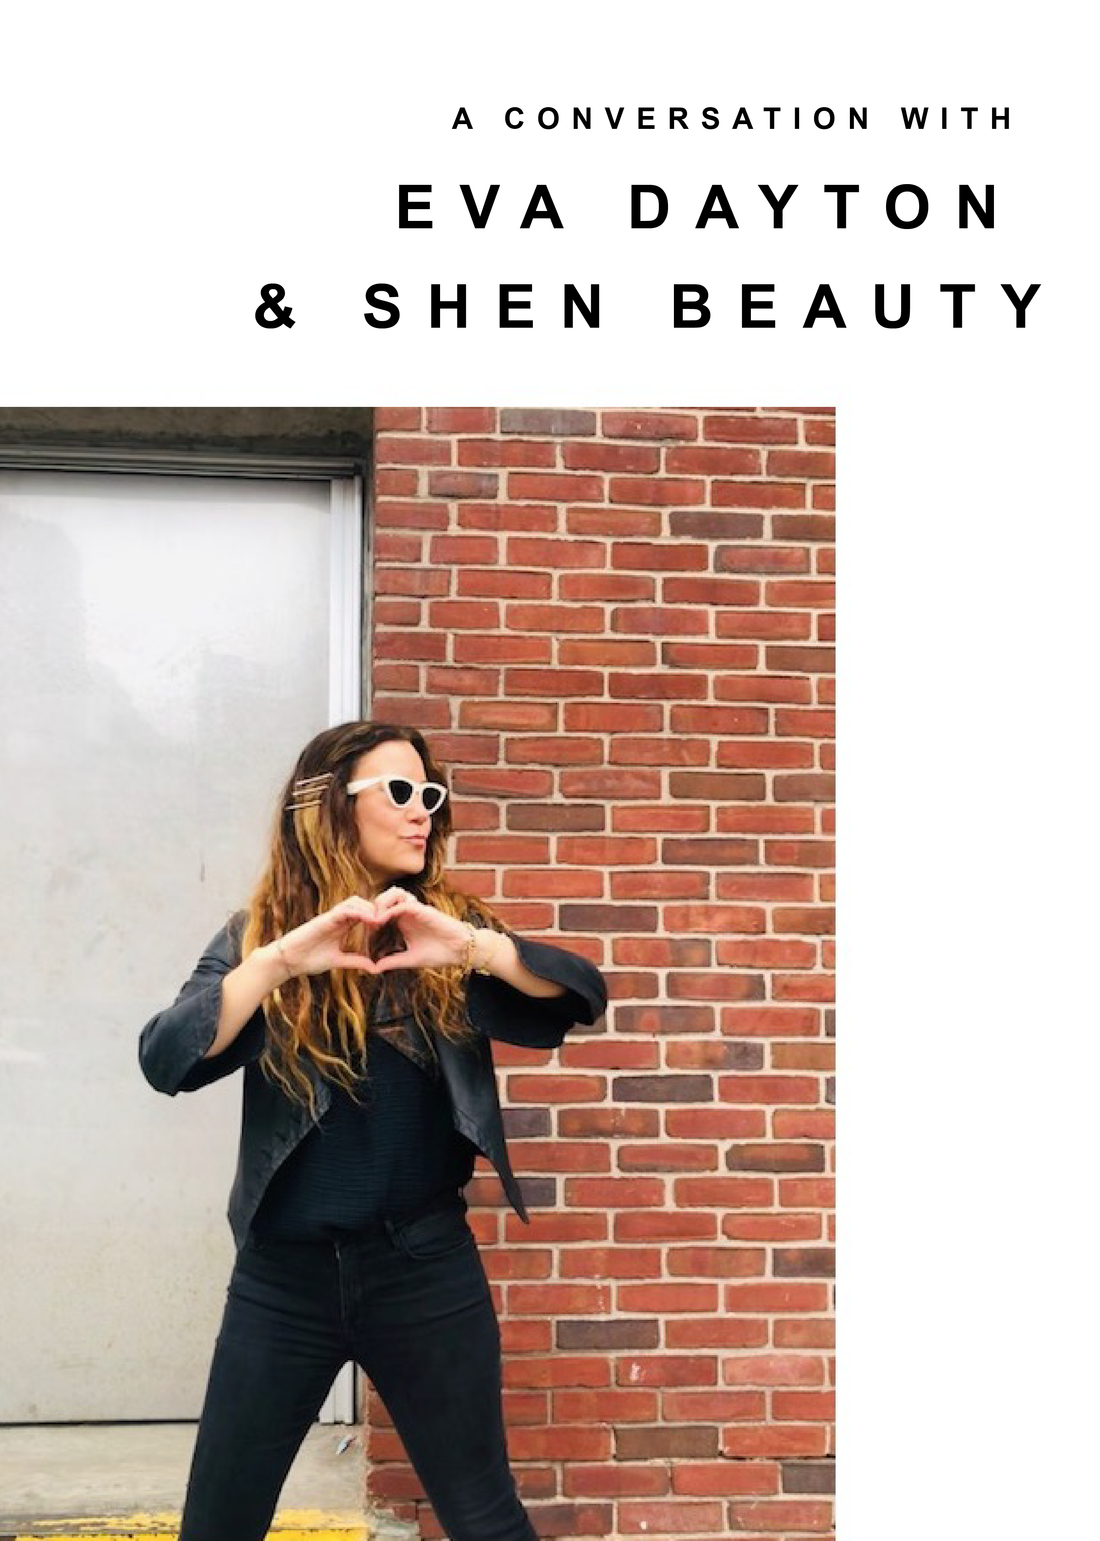 A Conversation with Eva & Shen Beauty